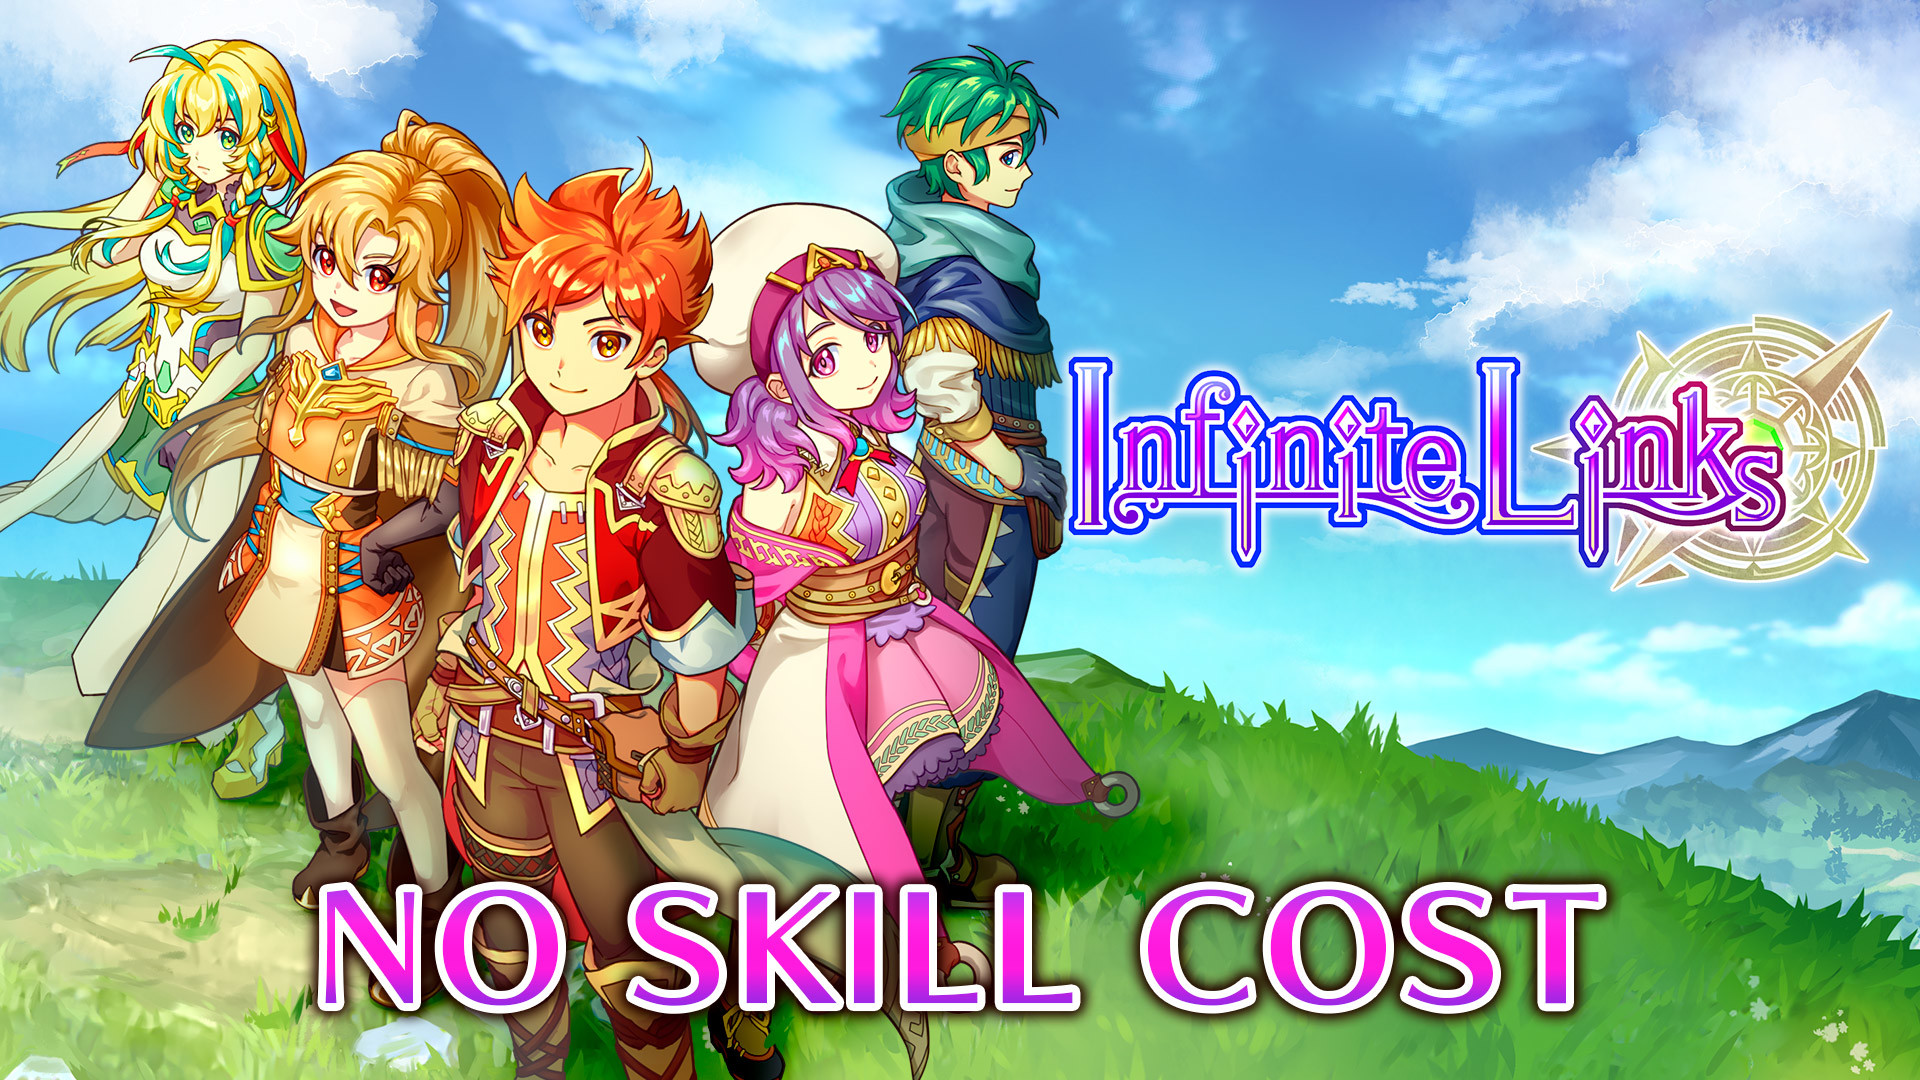 No Skill Cost - Infinite Links Featured Screenshot #1